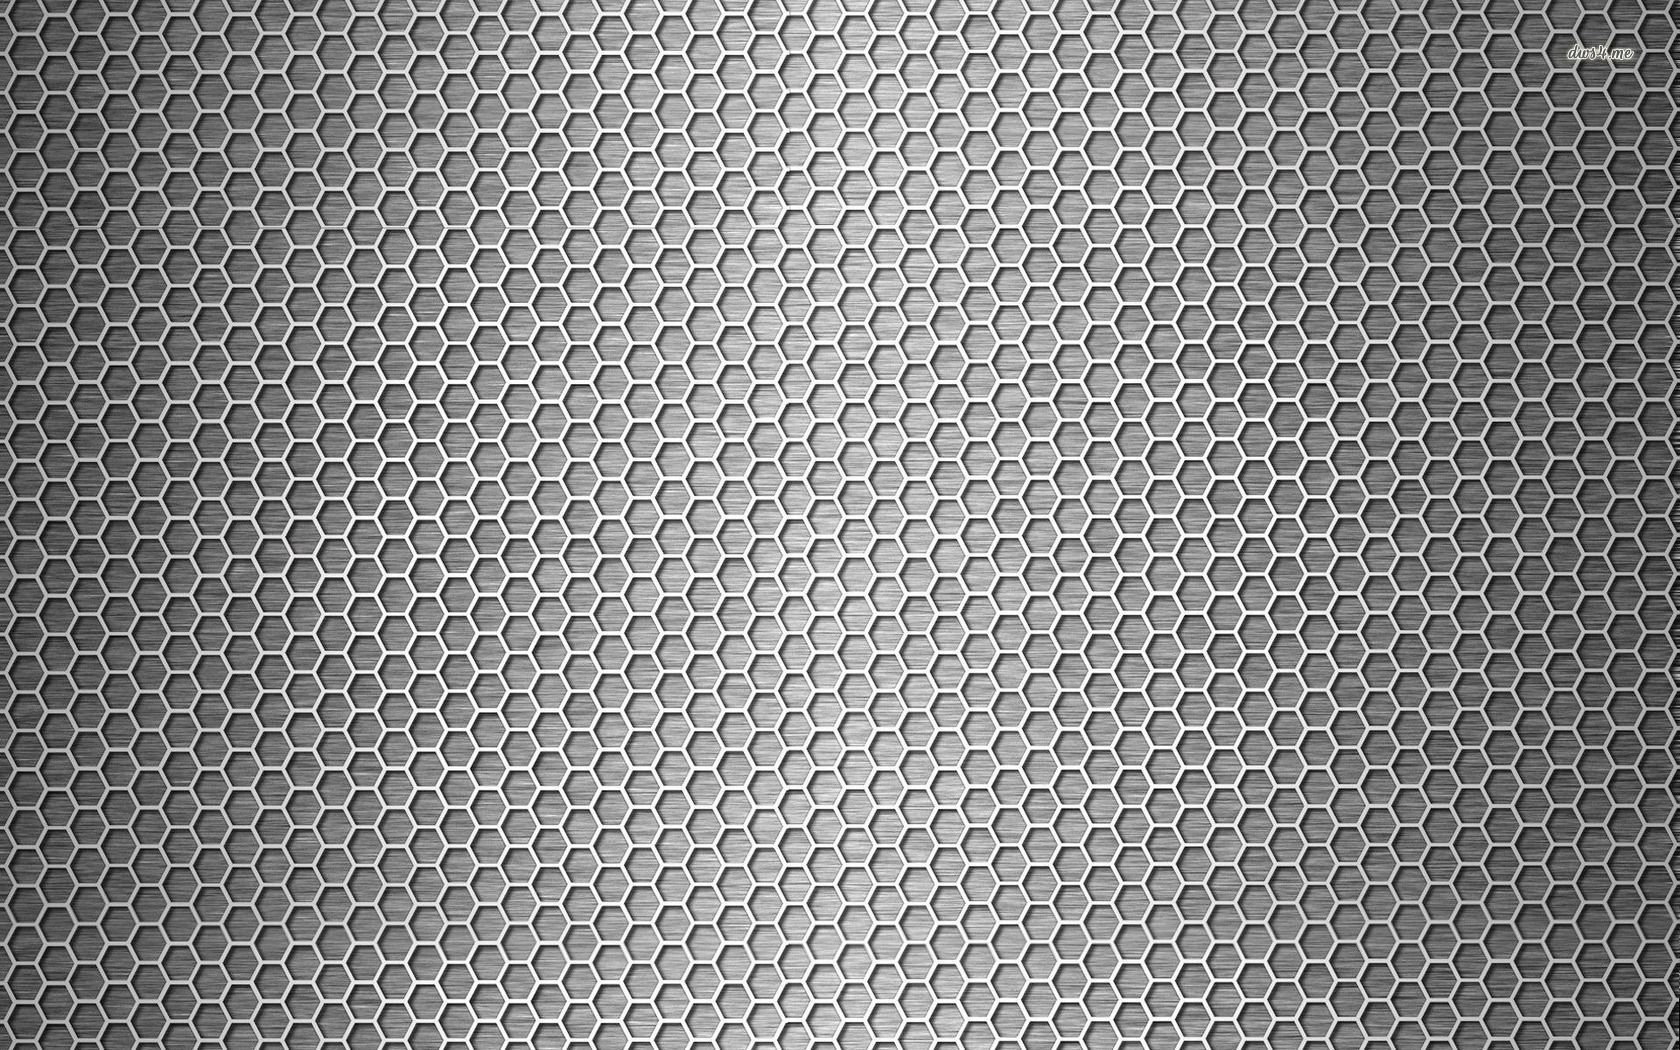 Metallic honeycomb pattern wallpaper - Abstract wallpapers - #21872